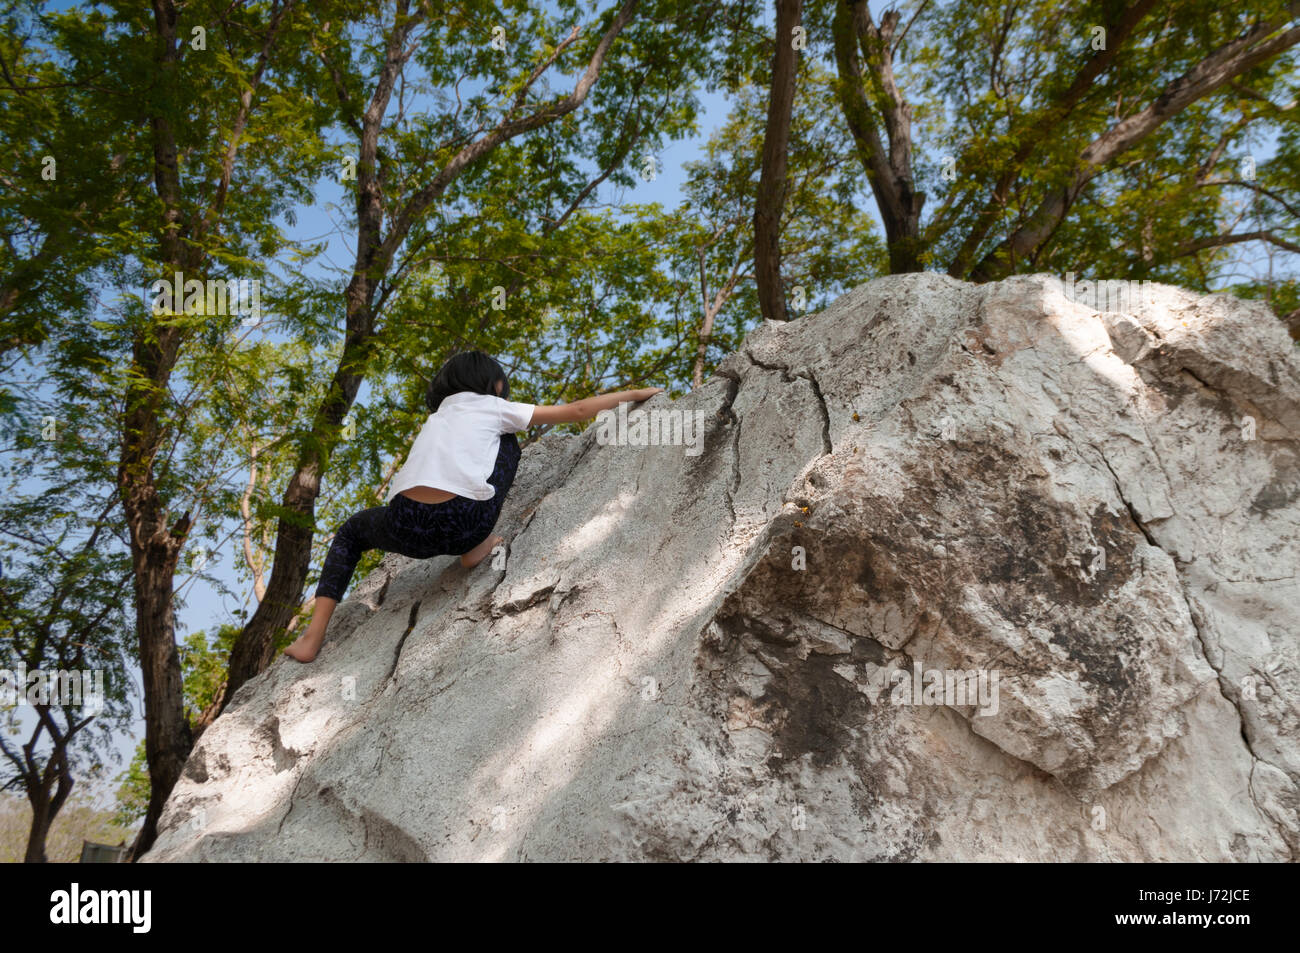 Young asian girl climbing rock boulder barehanded. Stock Photo